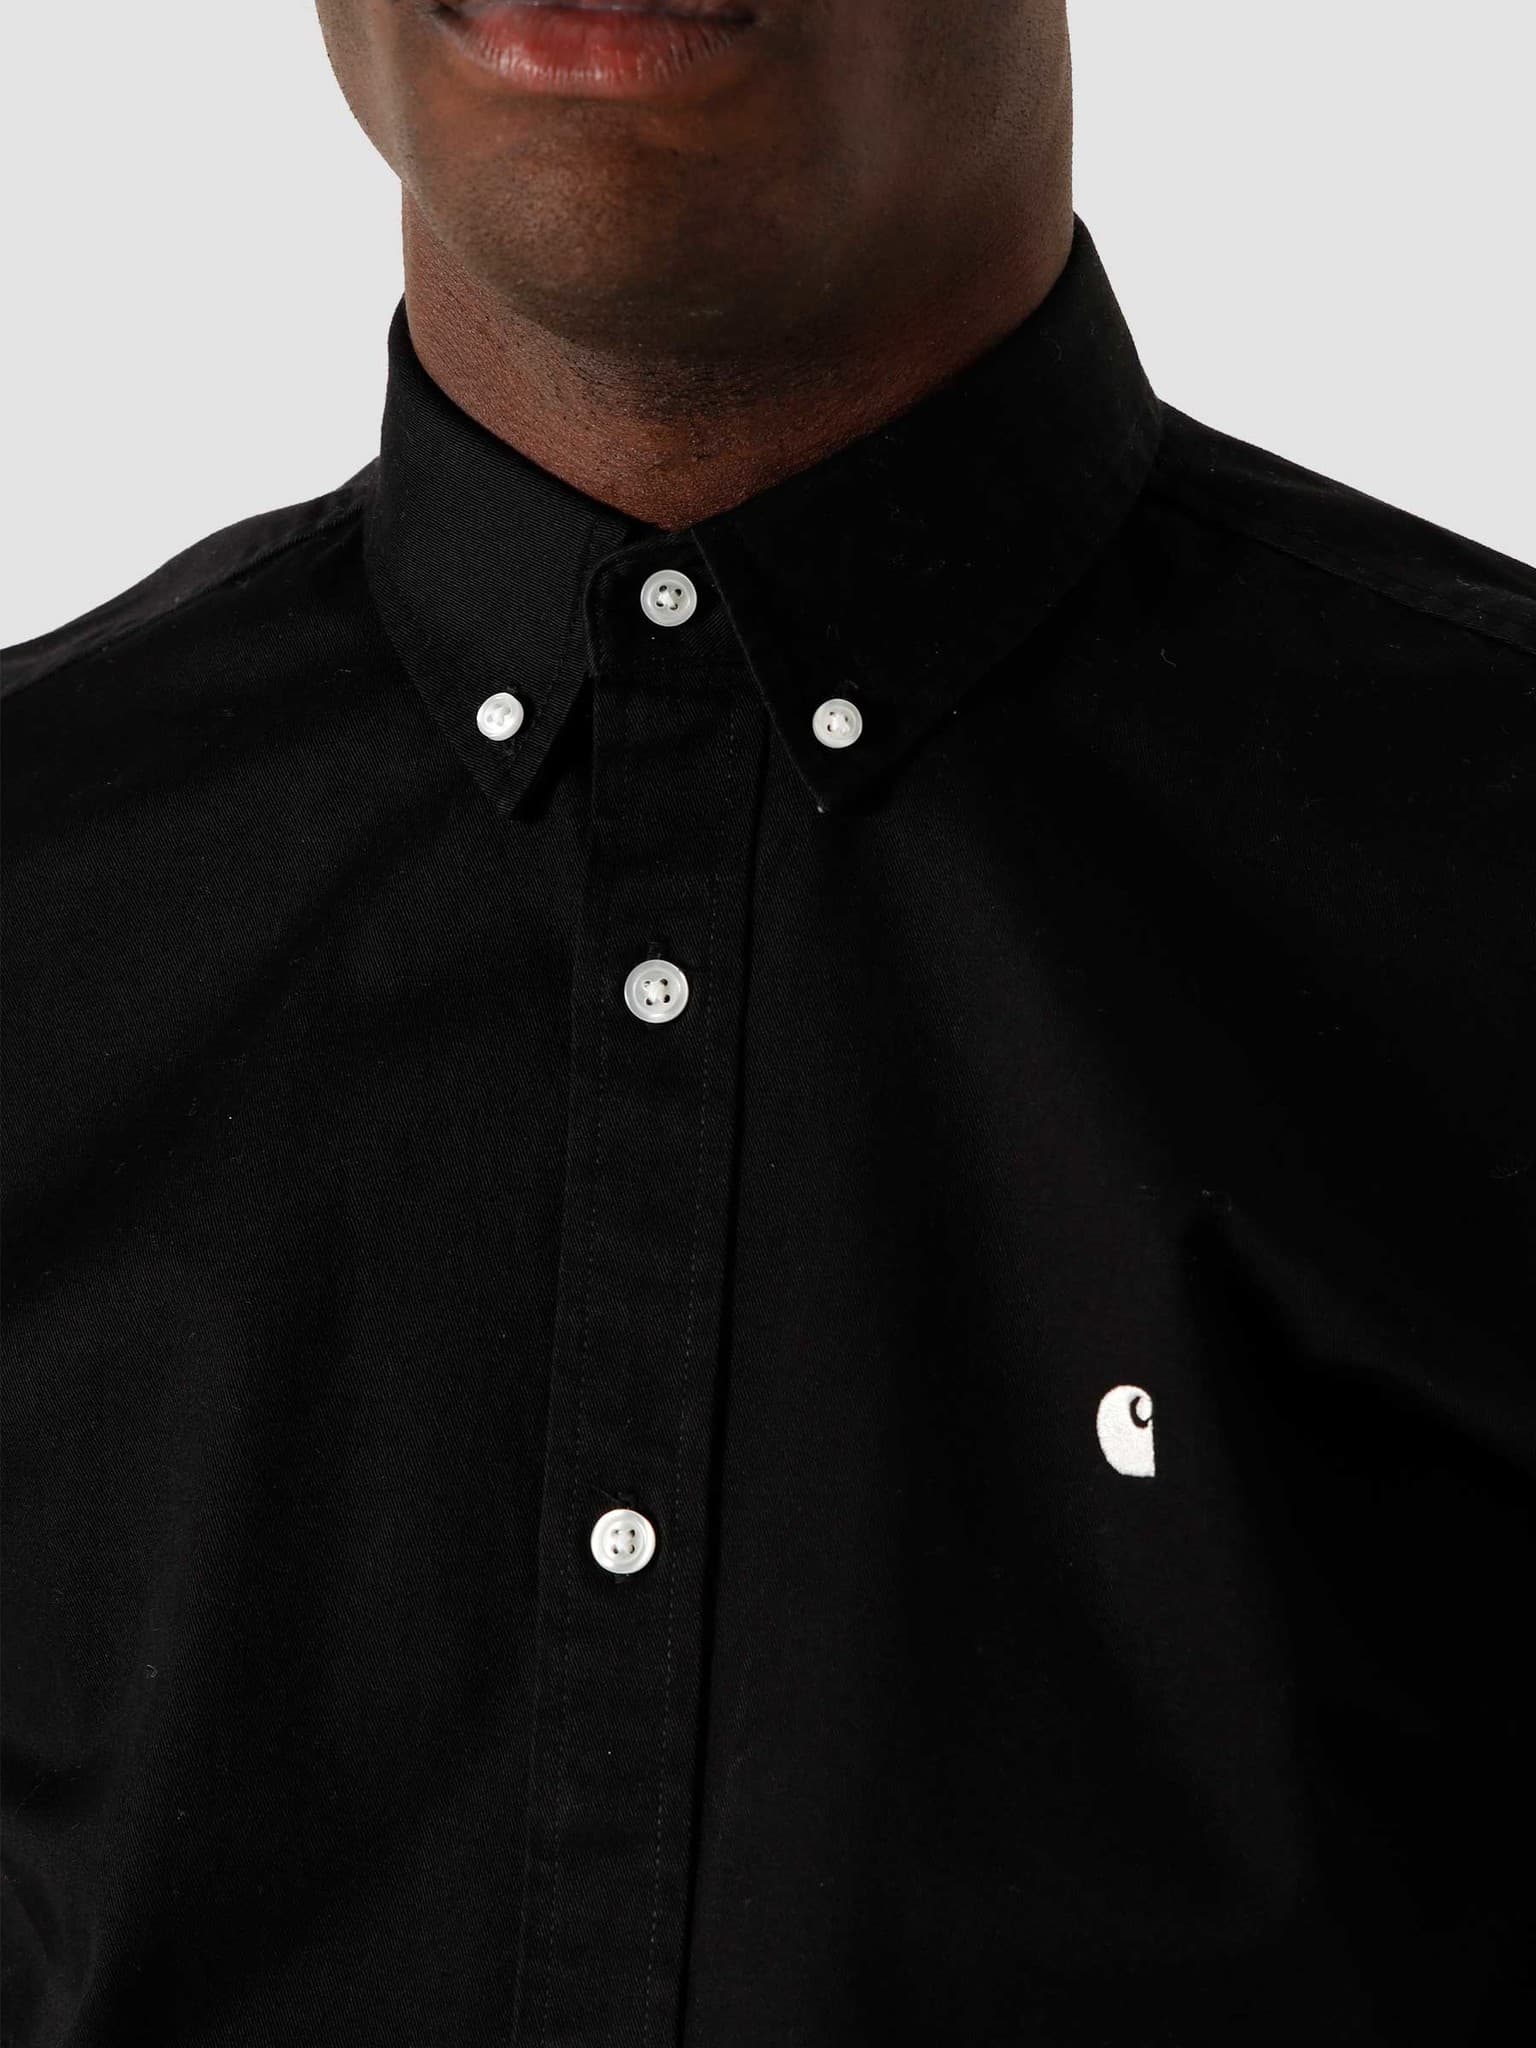 Madison Shirt Black Wax I023339-8990